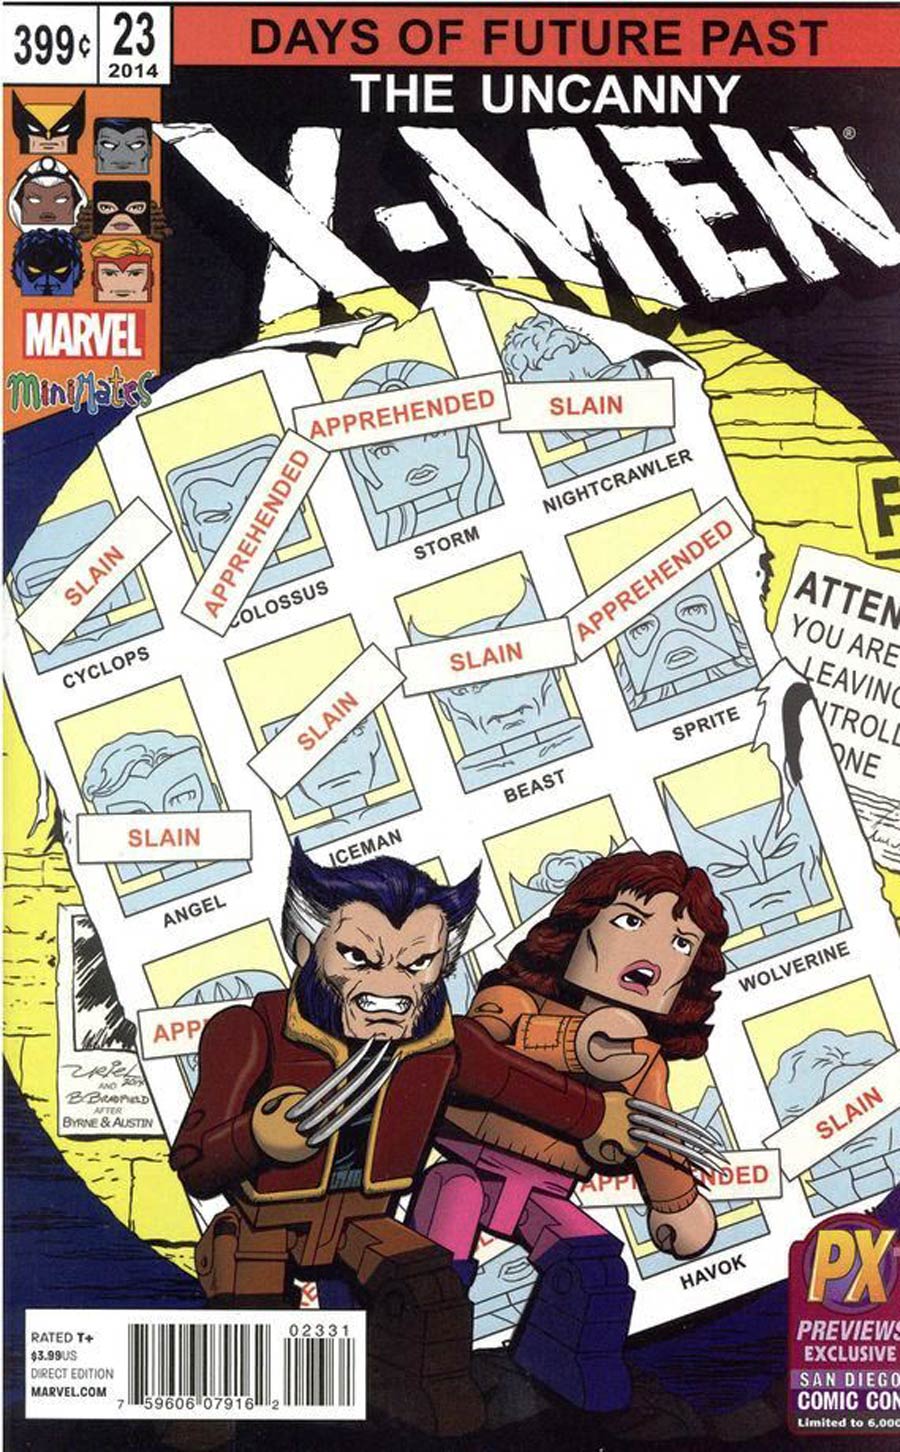 Uncanny X-Men Vol 3 #23 Cover D Minimates SDCC Exclusive Variant Cover (Original Sin Tie-In)